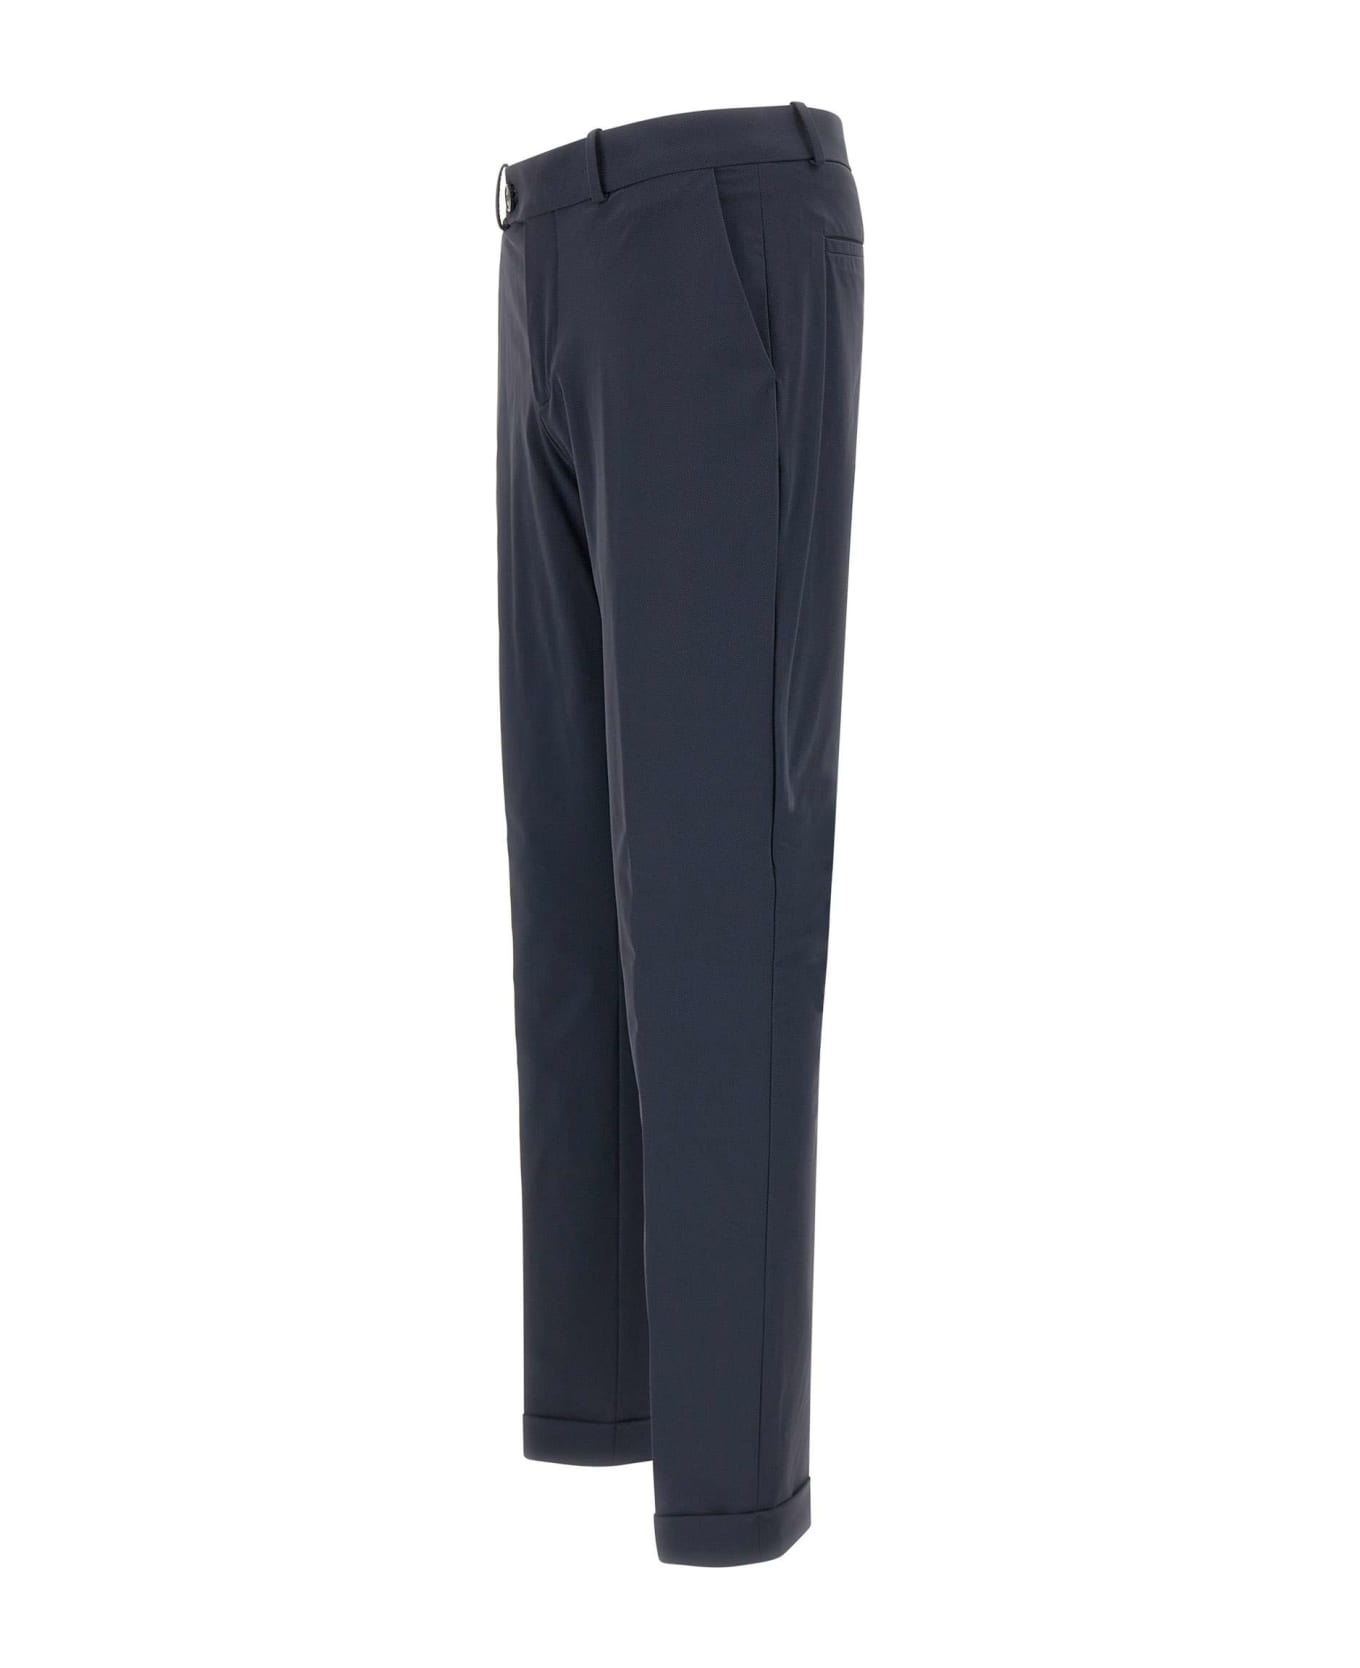 RRD - Roberto Ricci Design "micro Chino Pant" Men's Trousers - BLUE